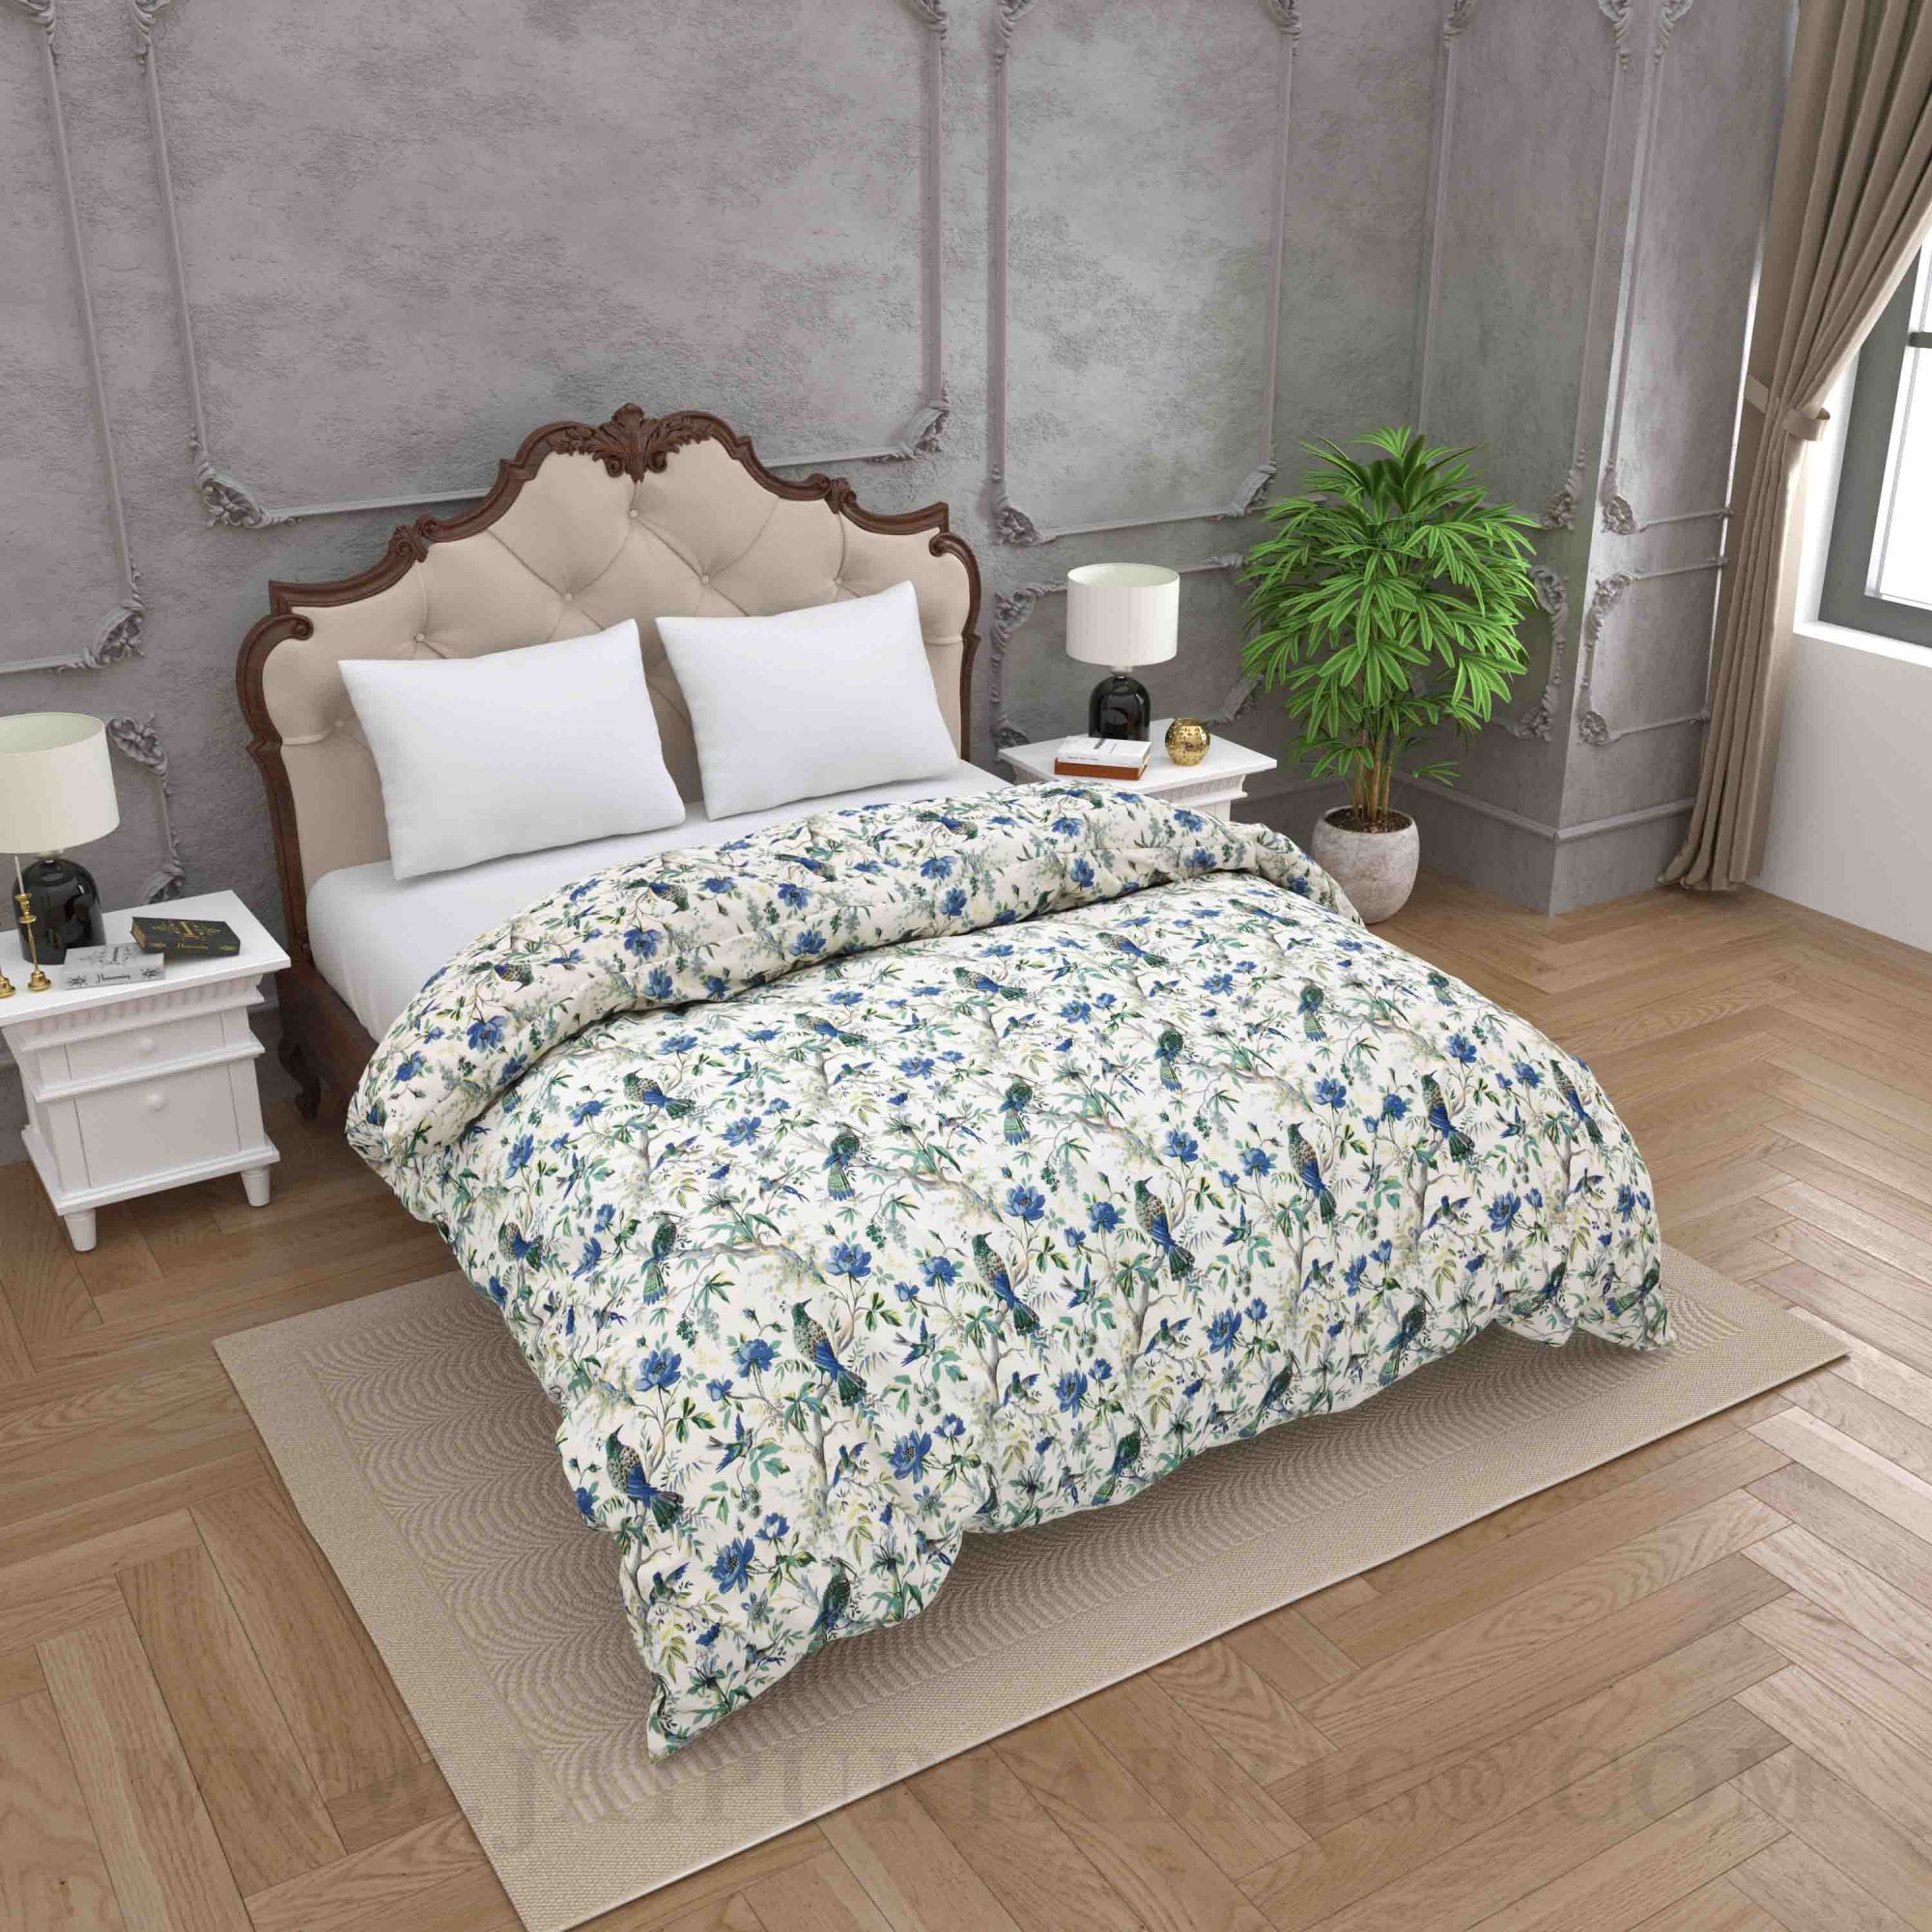 JaipurFabric® Anokhi Print Blue Bird Double Bed Comforter